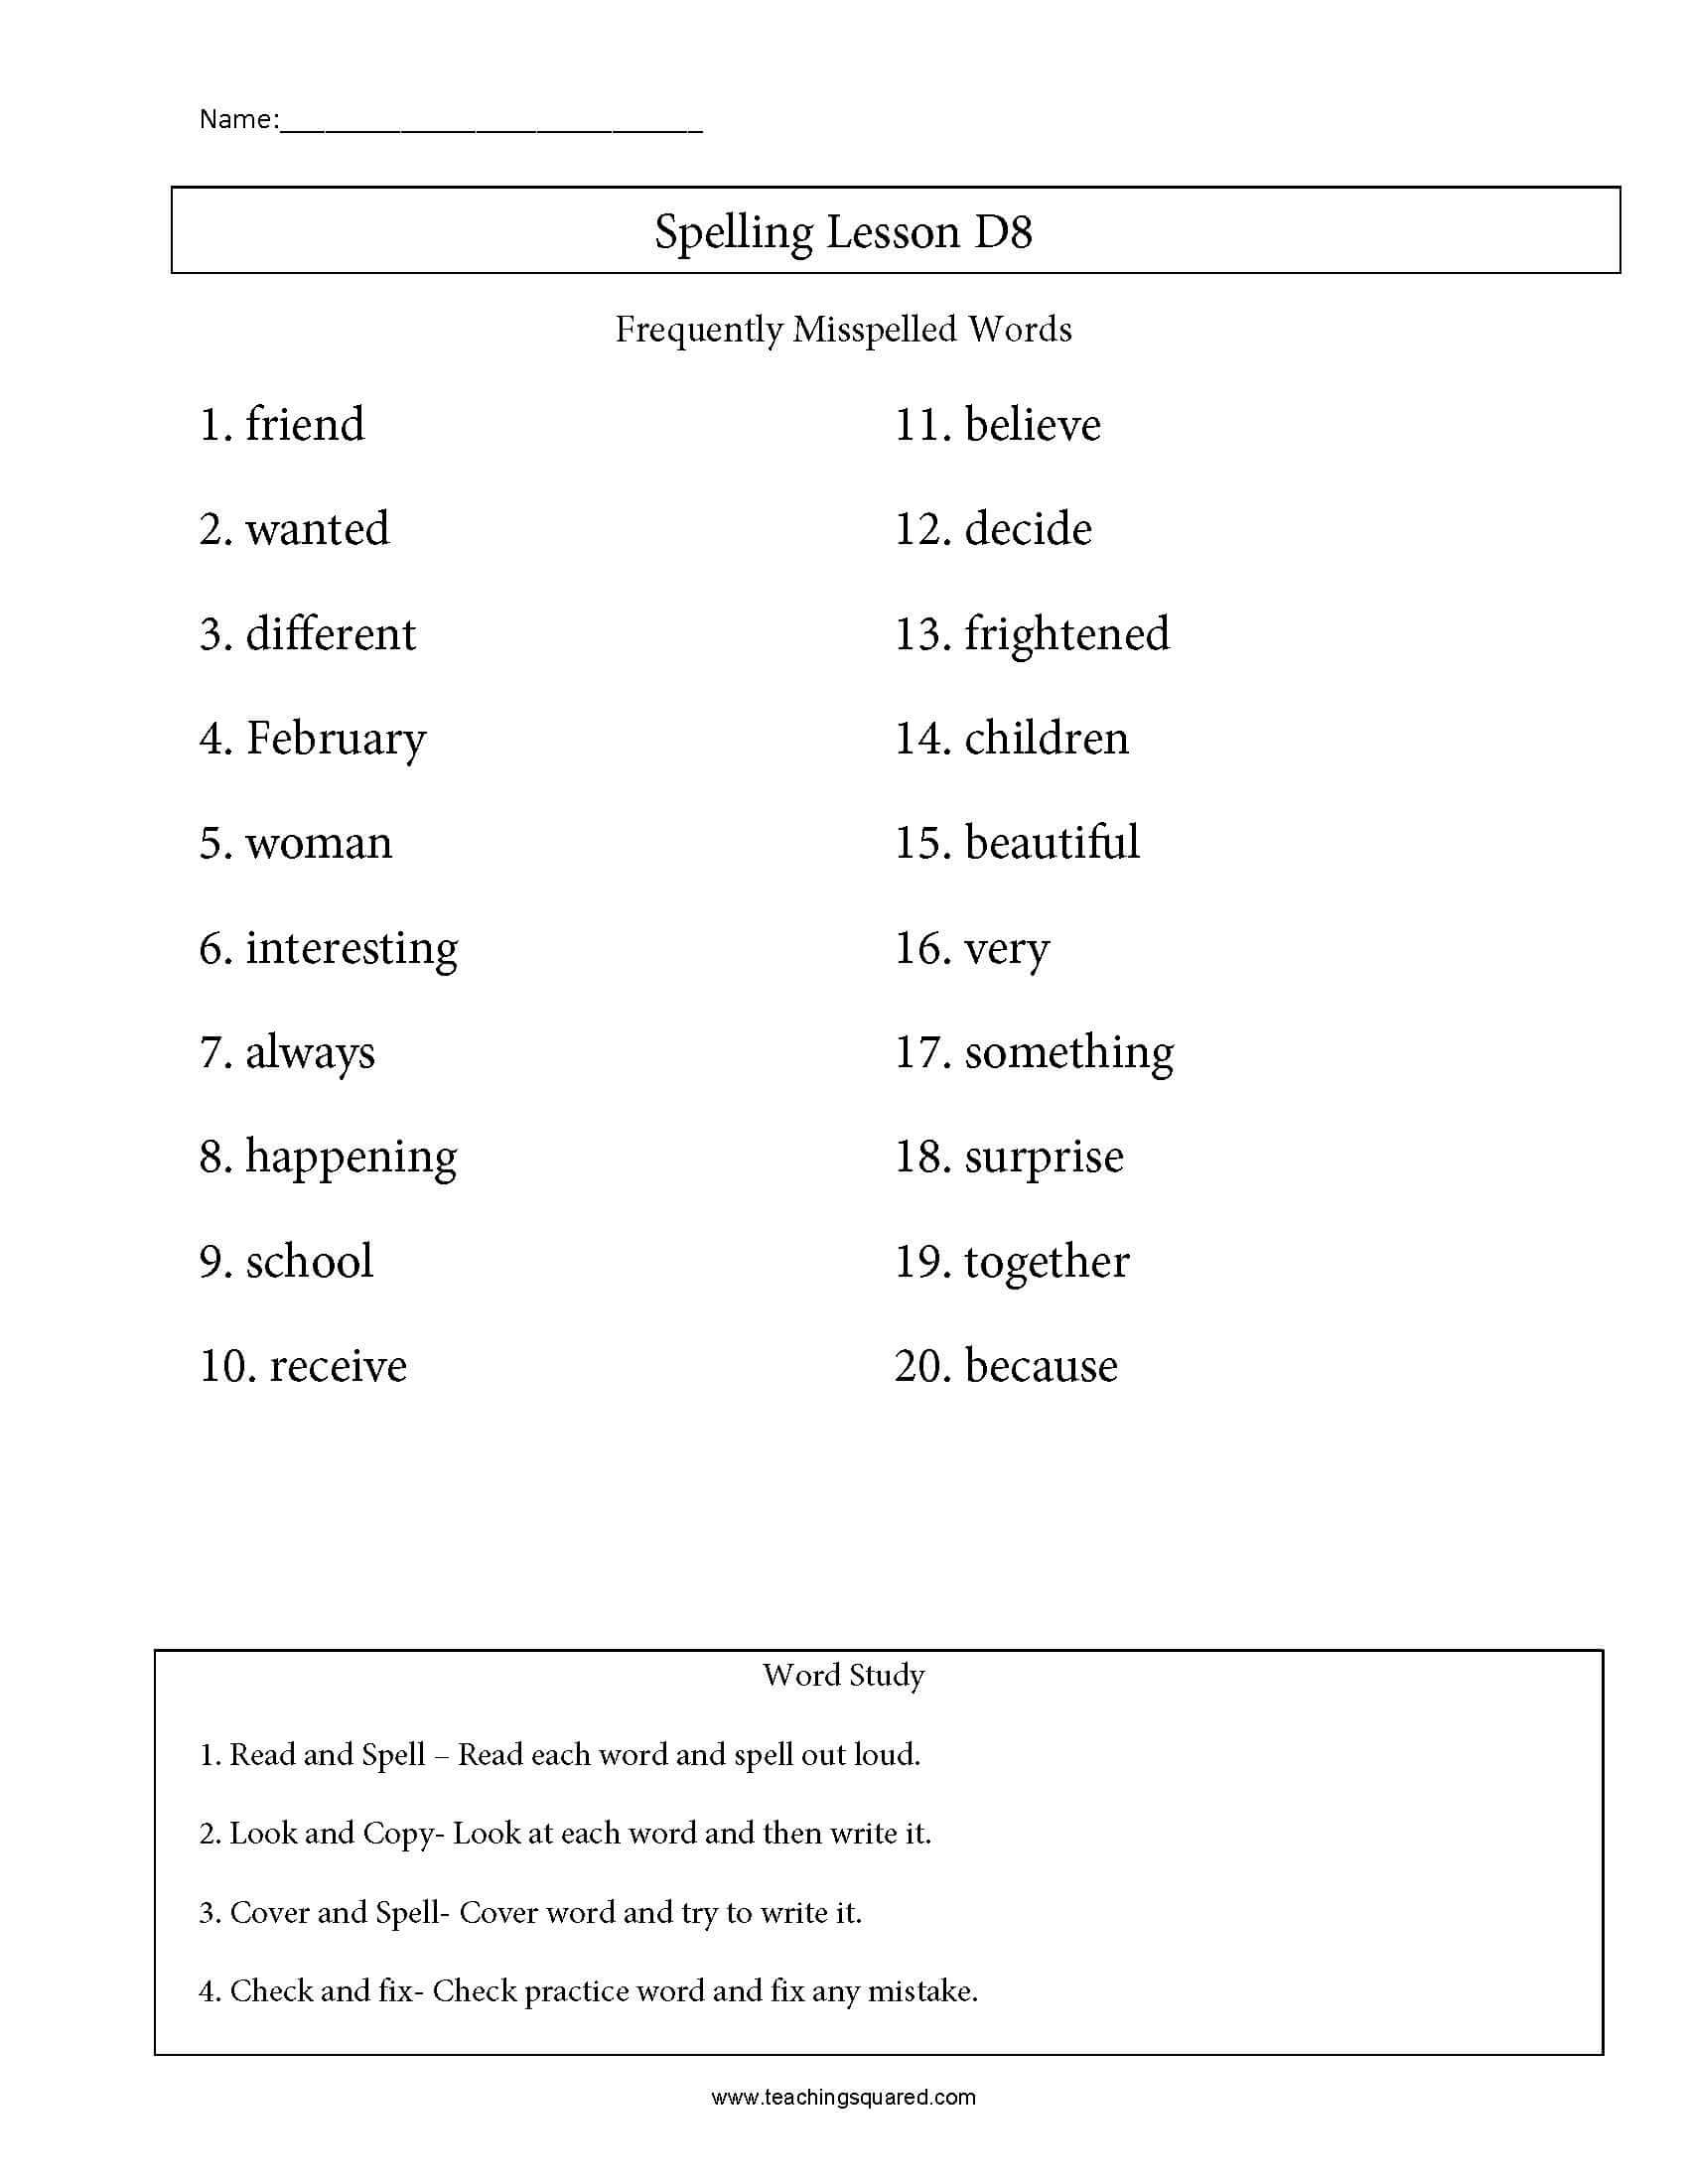 Spelling List D25- Misspelled Words - Teaching Squared For Commonly Misspelled Words Worksheet